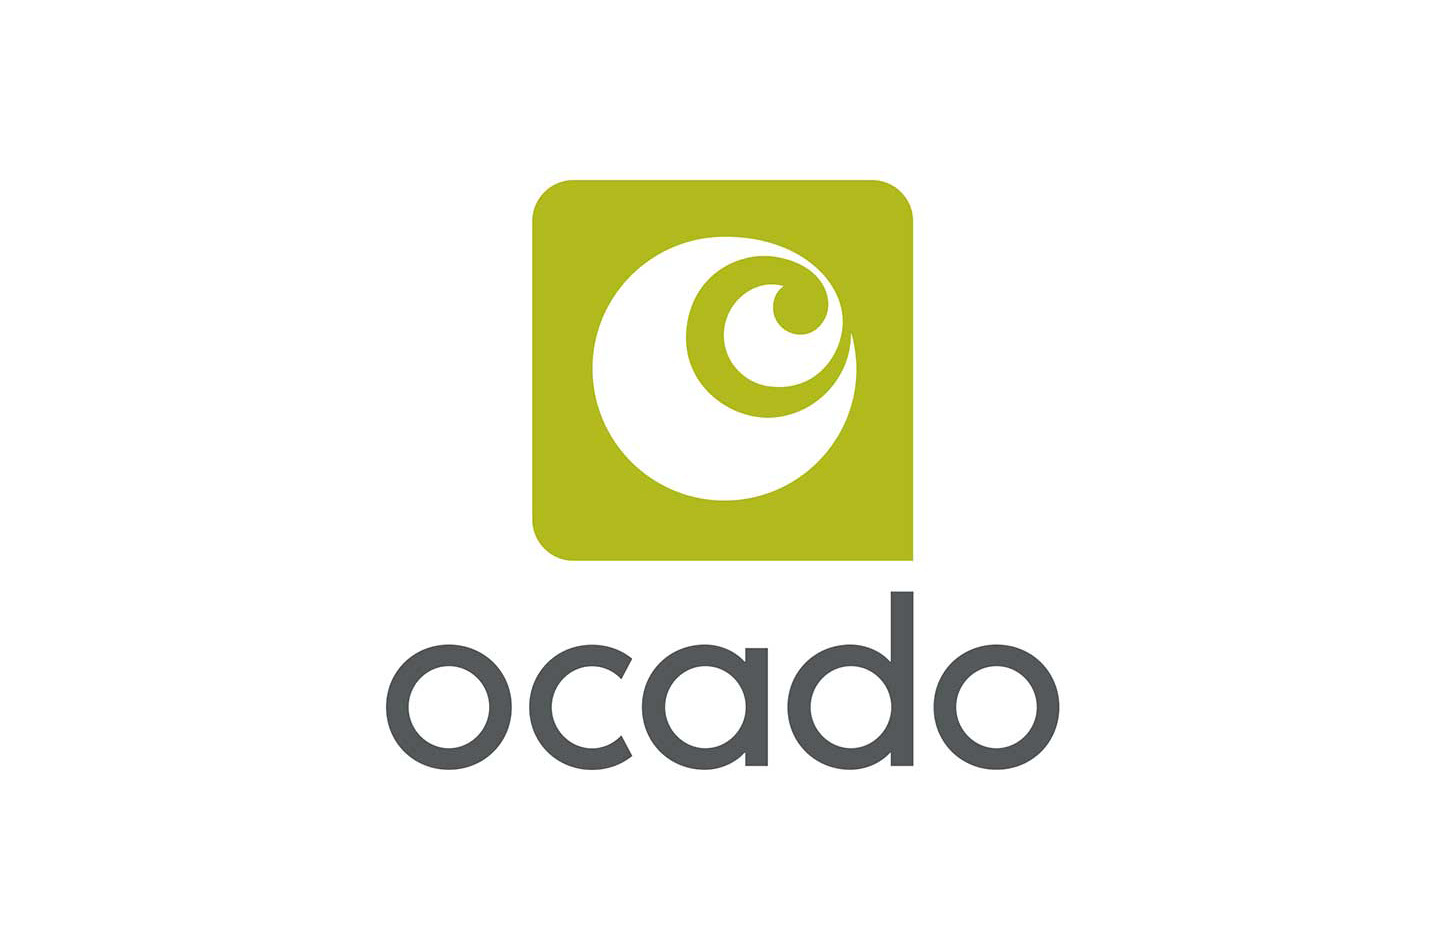 Ocados 2020 discount code logo